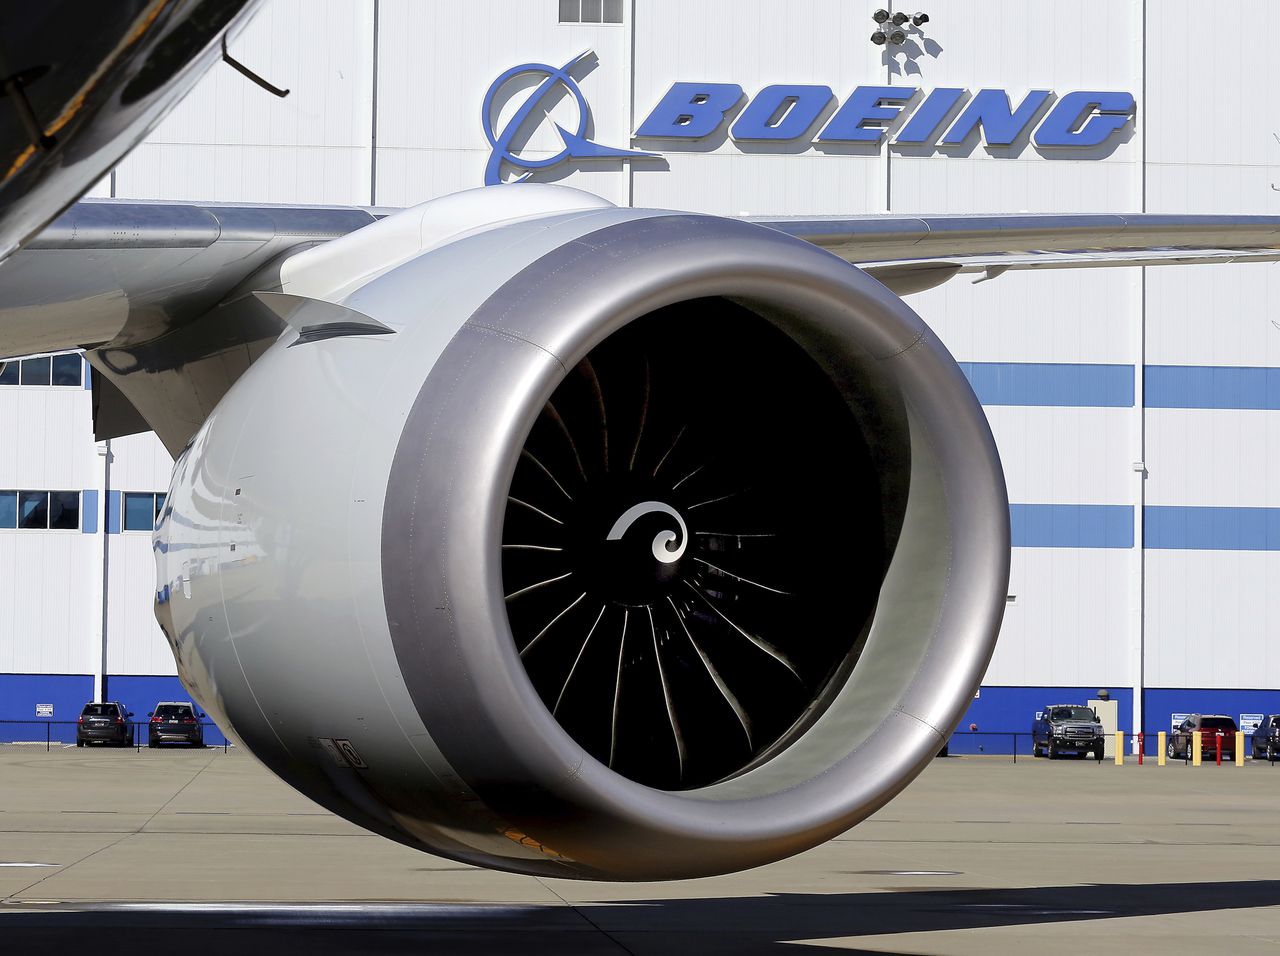 De vleugel en motor van het honderdste toestel van het type Boeing 787 Dreamliner.